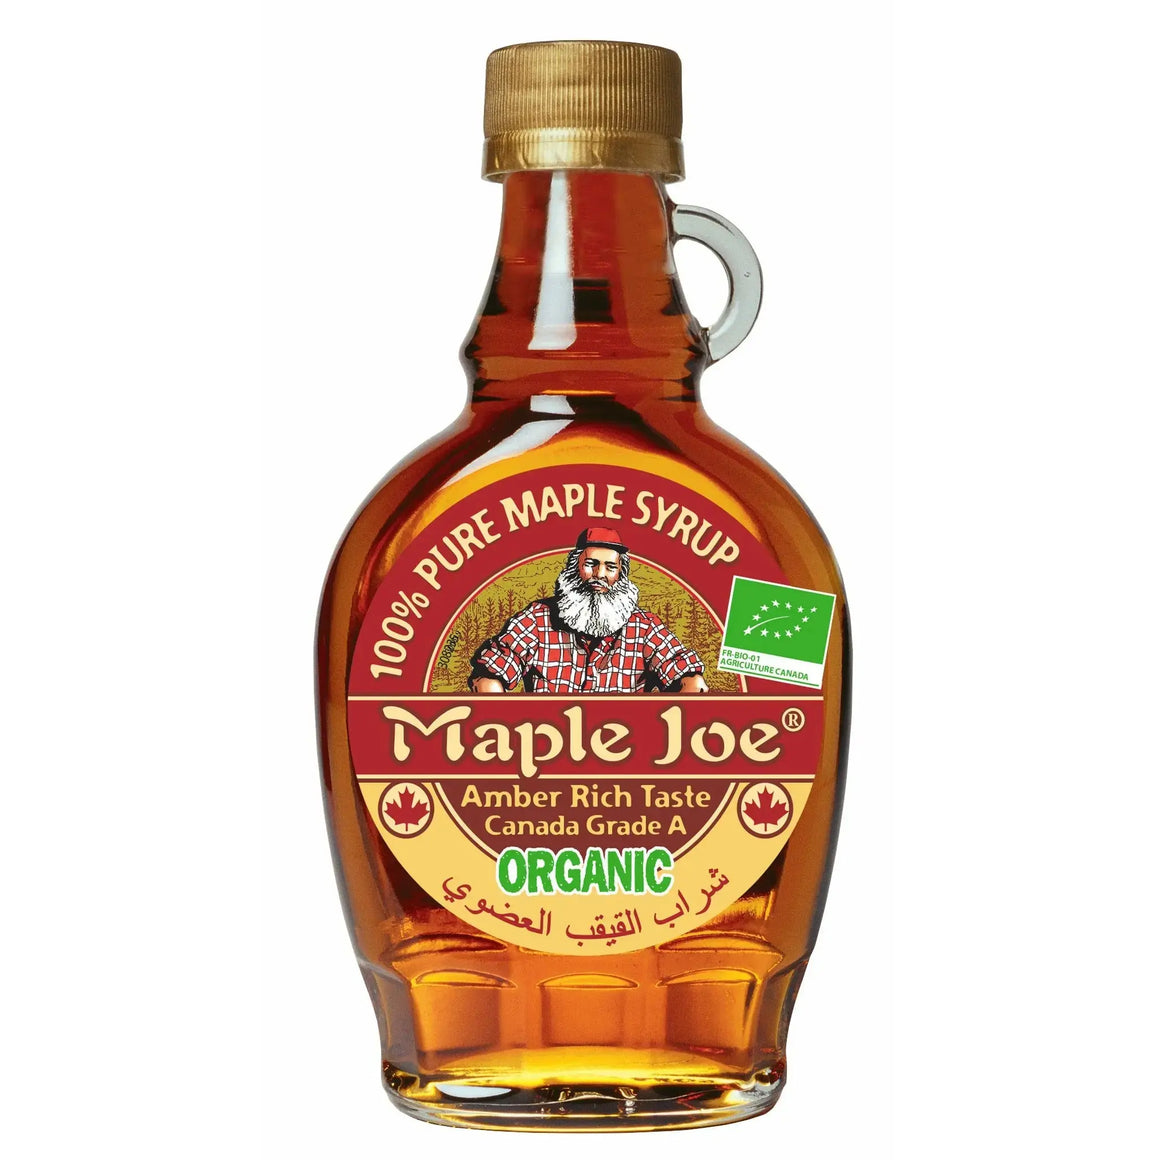 Maple Joe Syrup Organic Glass Jar 250g Maple Joe